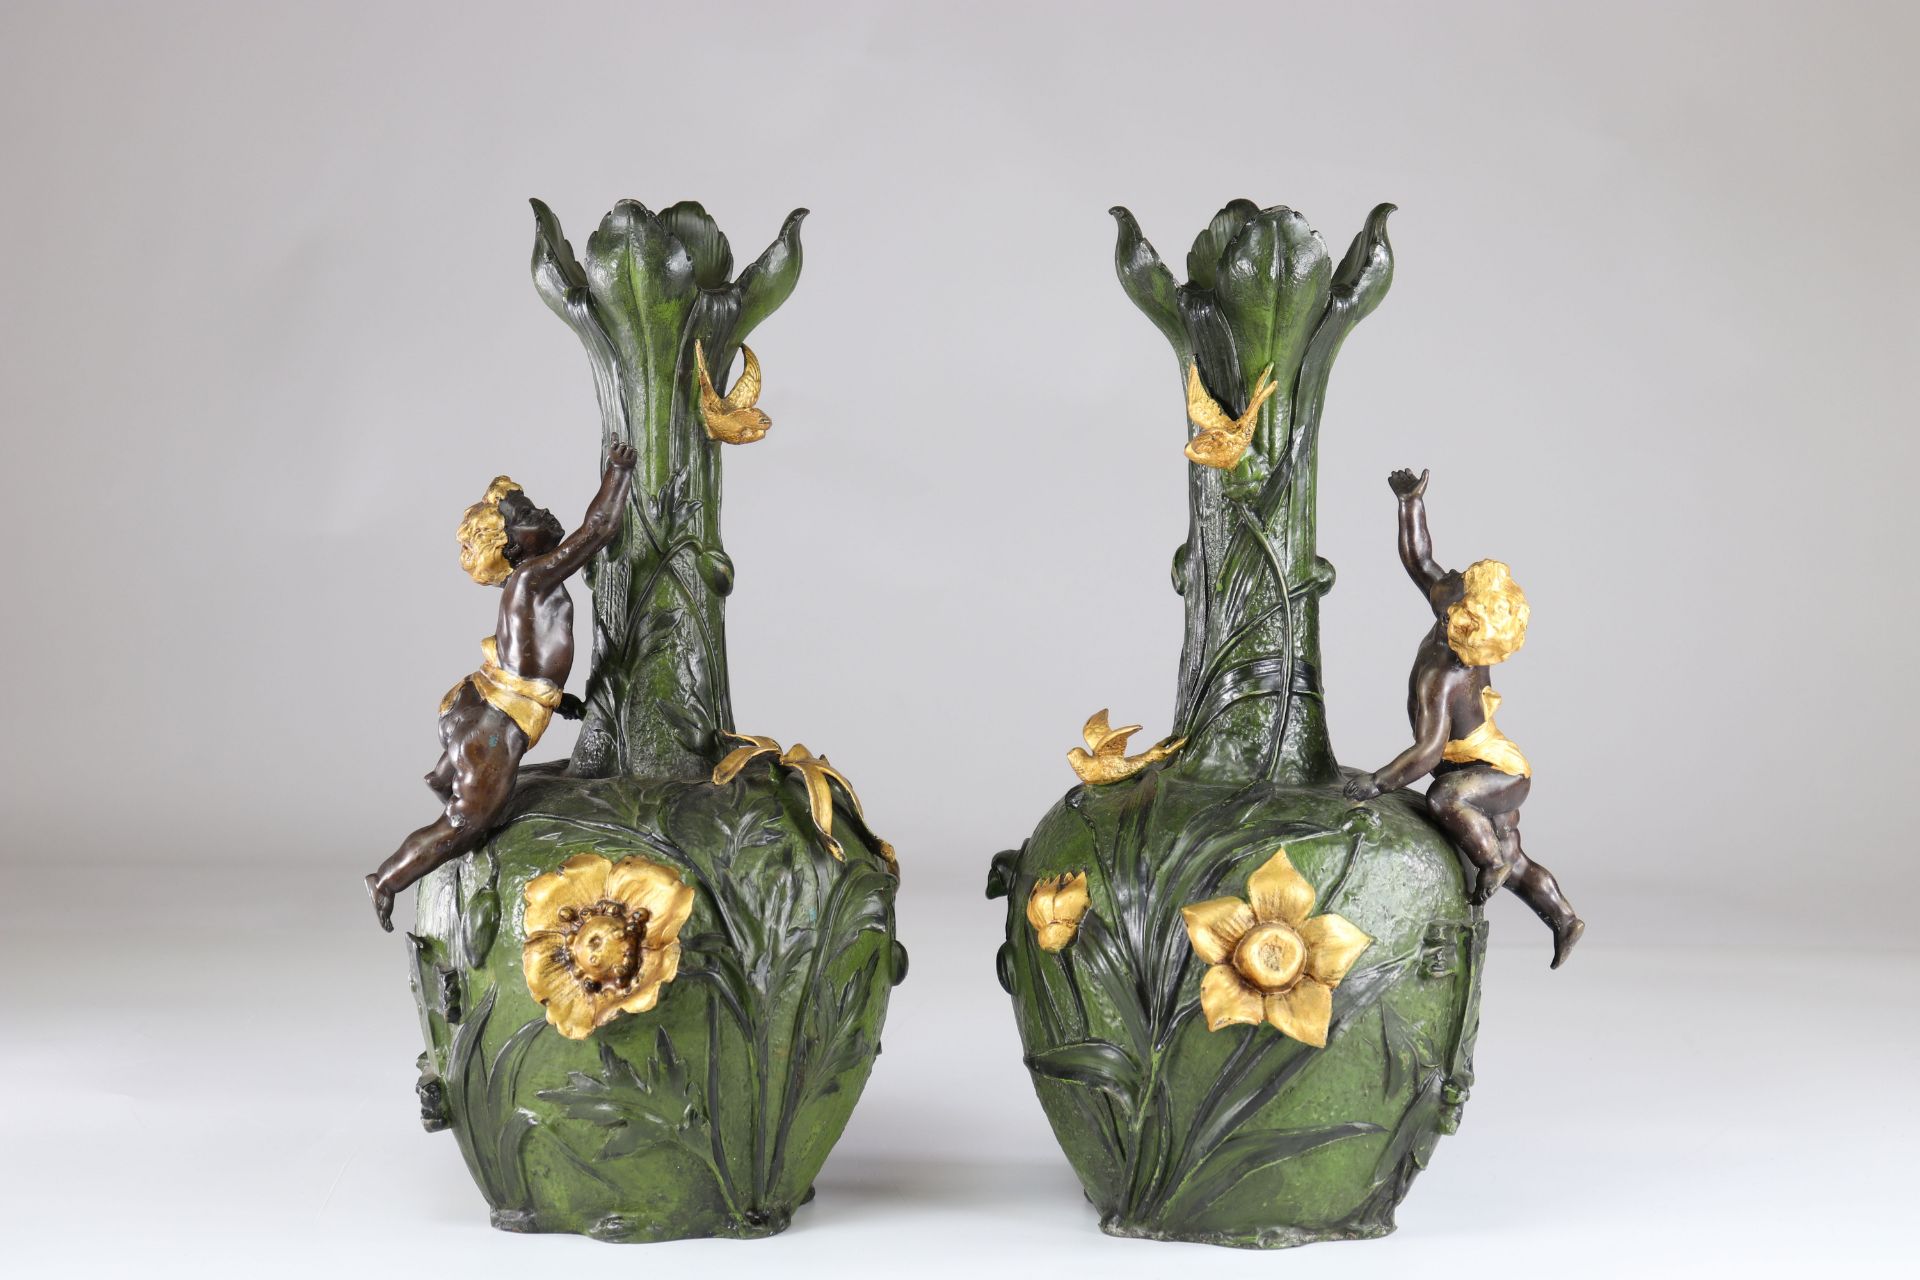 Pair of Art Nouveau vases with floral decoration and cherubs